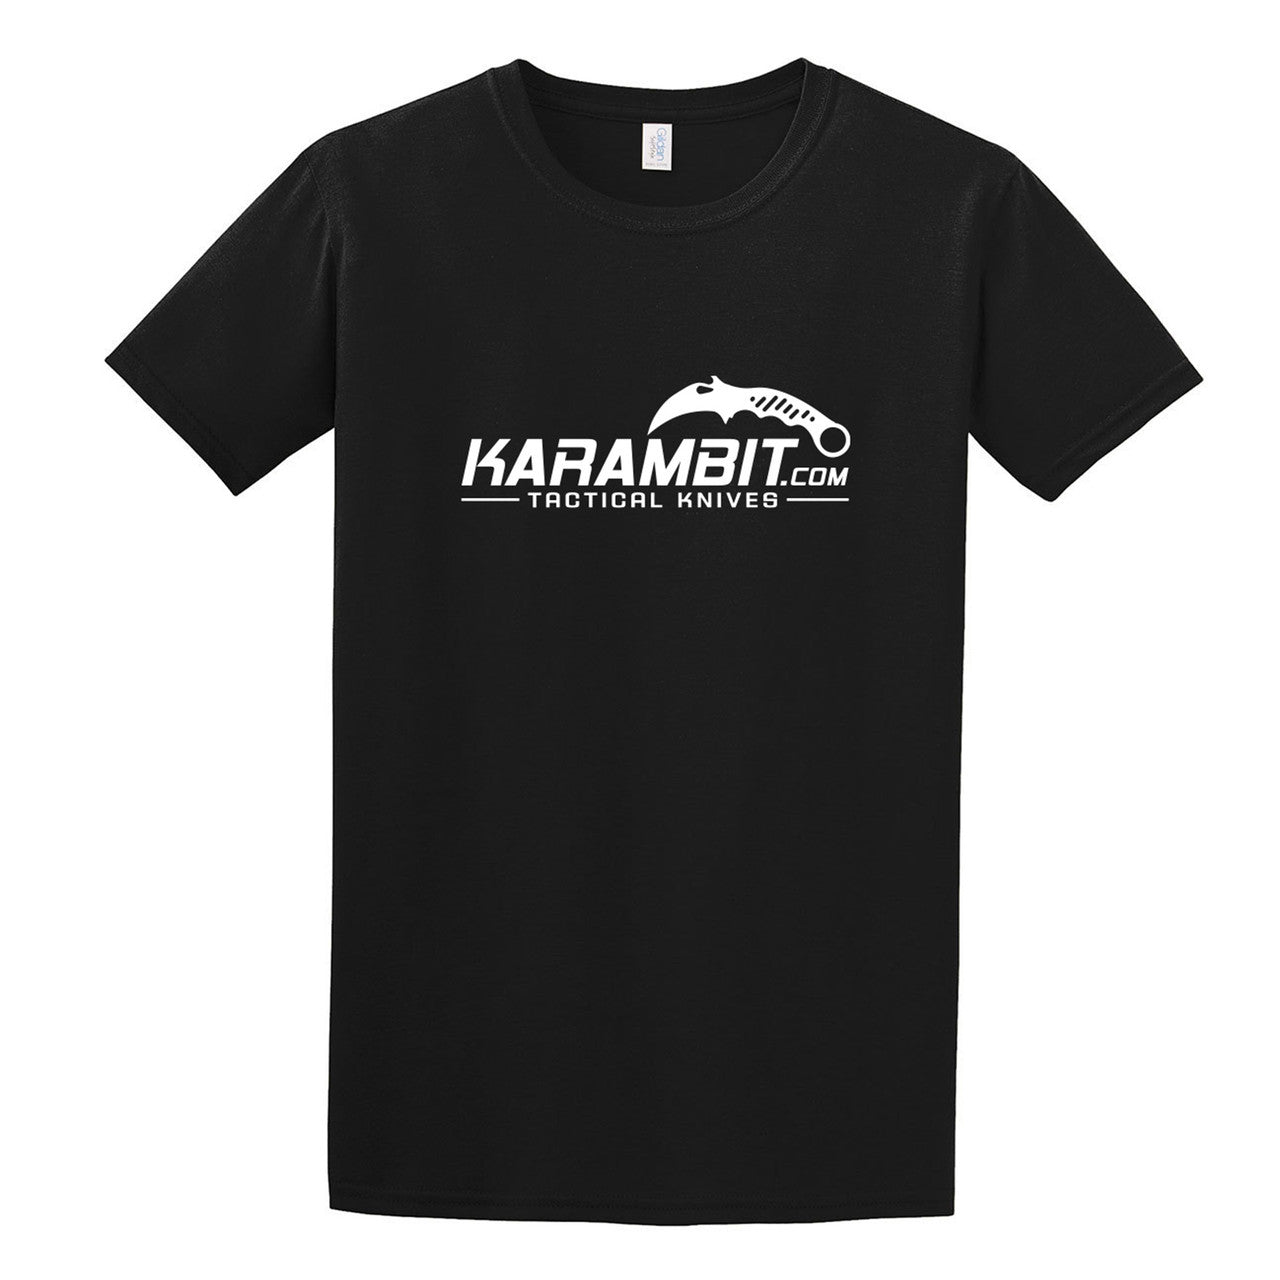 Karambit.com Softstyle® T-Shirt, Color: Black, front of shirt w/ Karambit.com white logo. (KbitlogoSoftstyleTee-BLK)